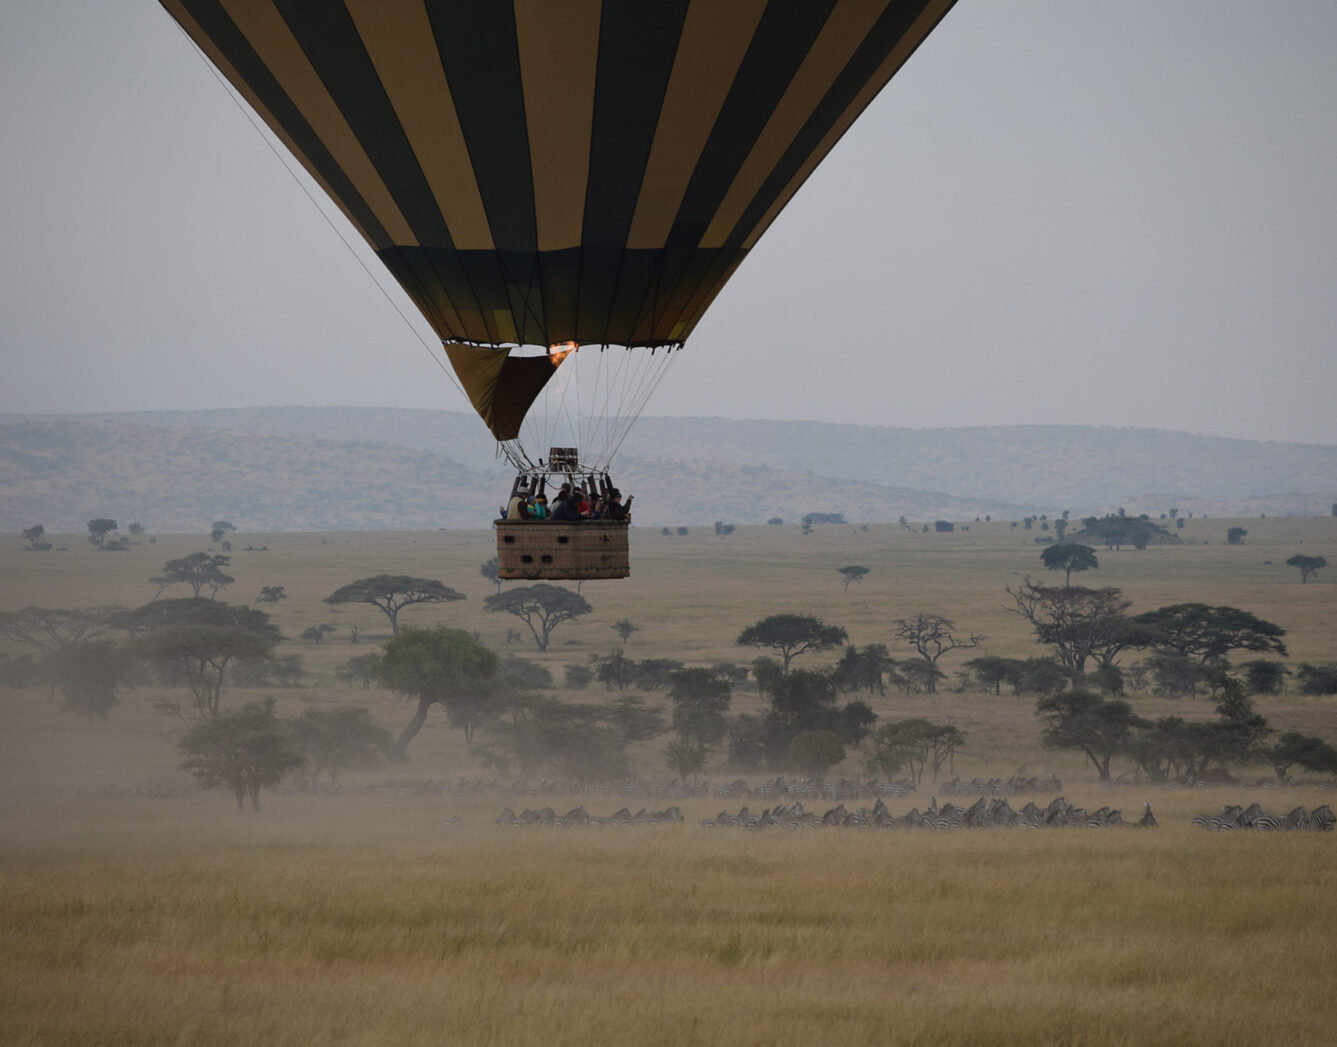 A hot air balloon flys over a herd of zebras